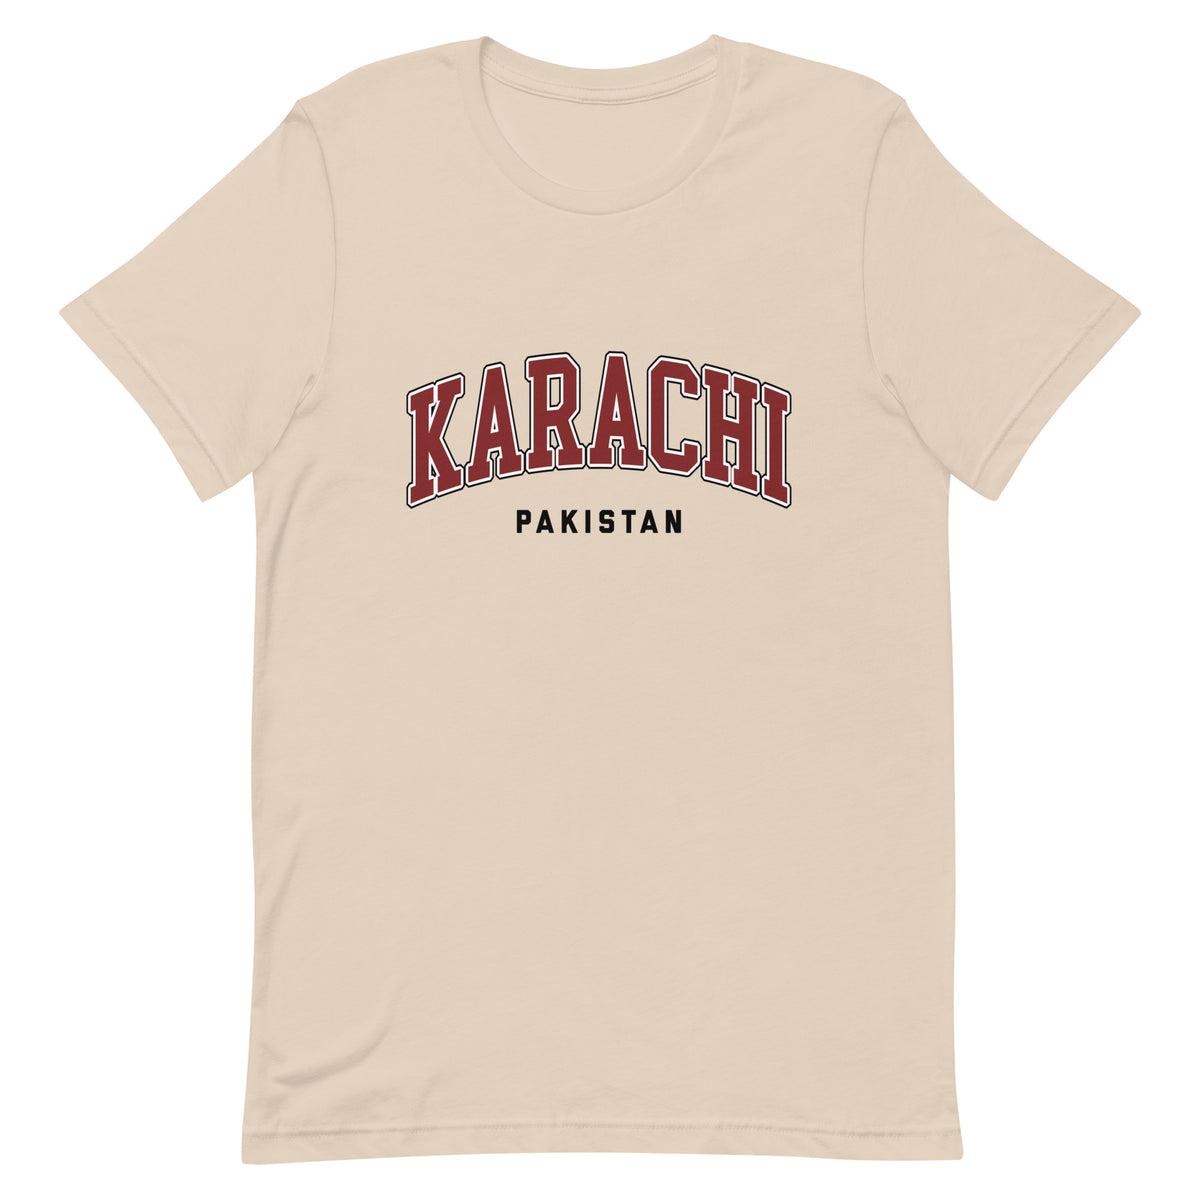 Karachi, Pakistan - T Shirt